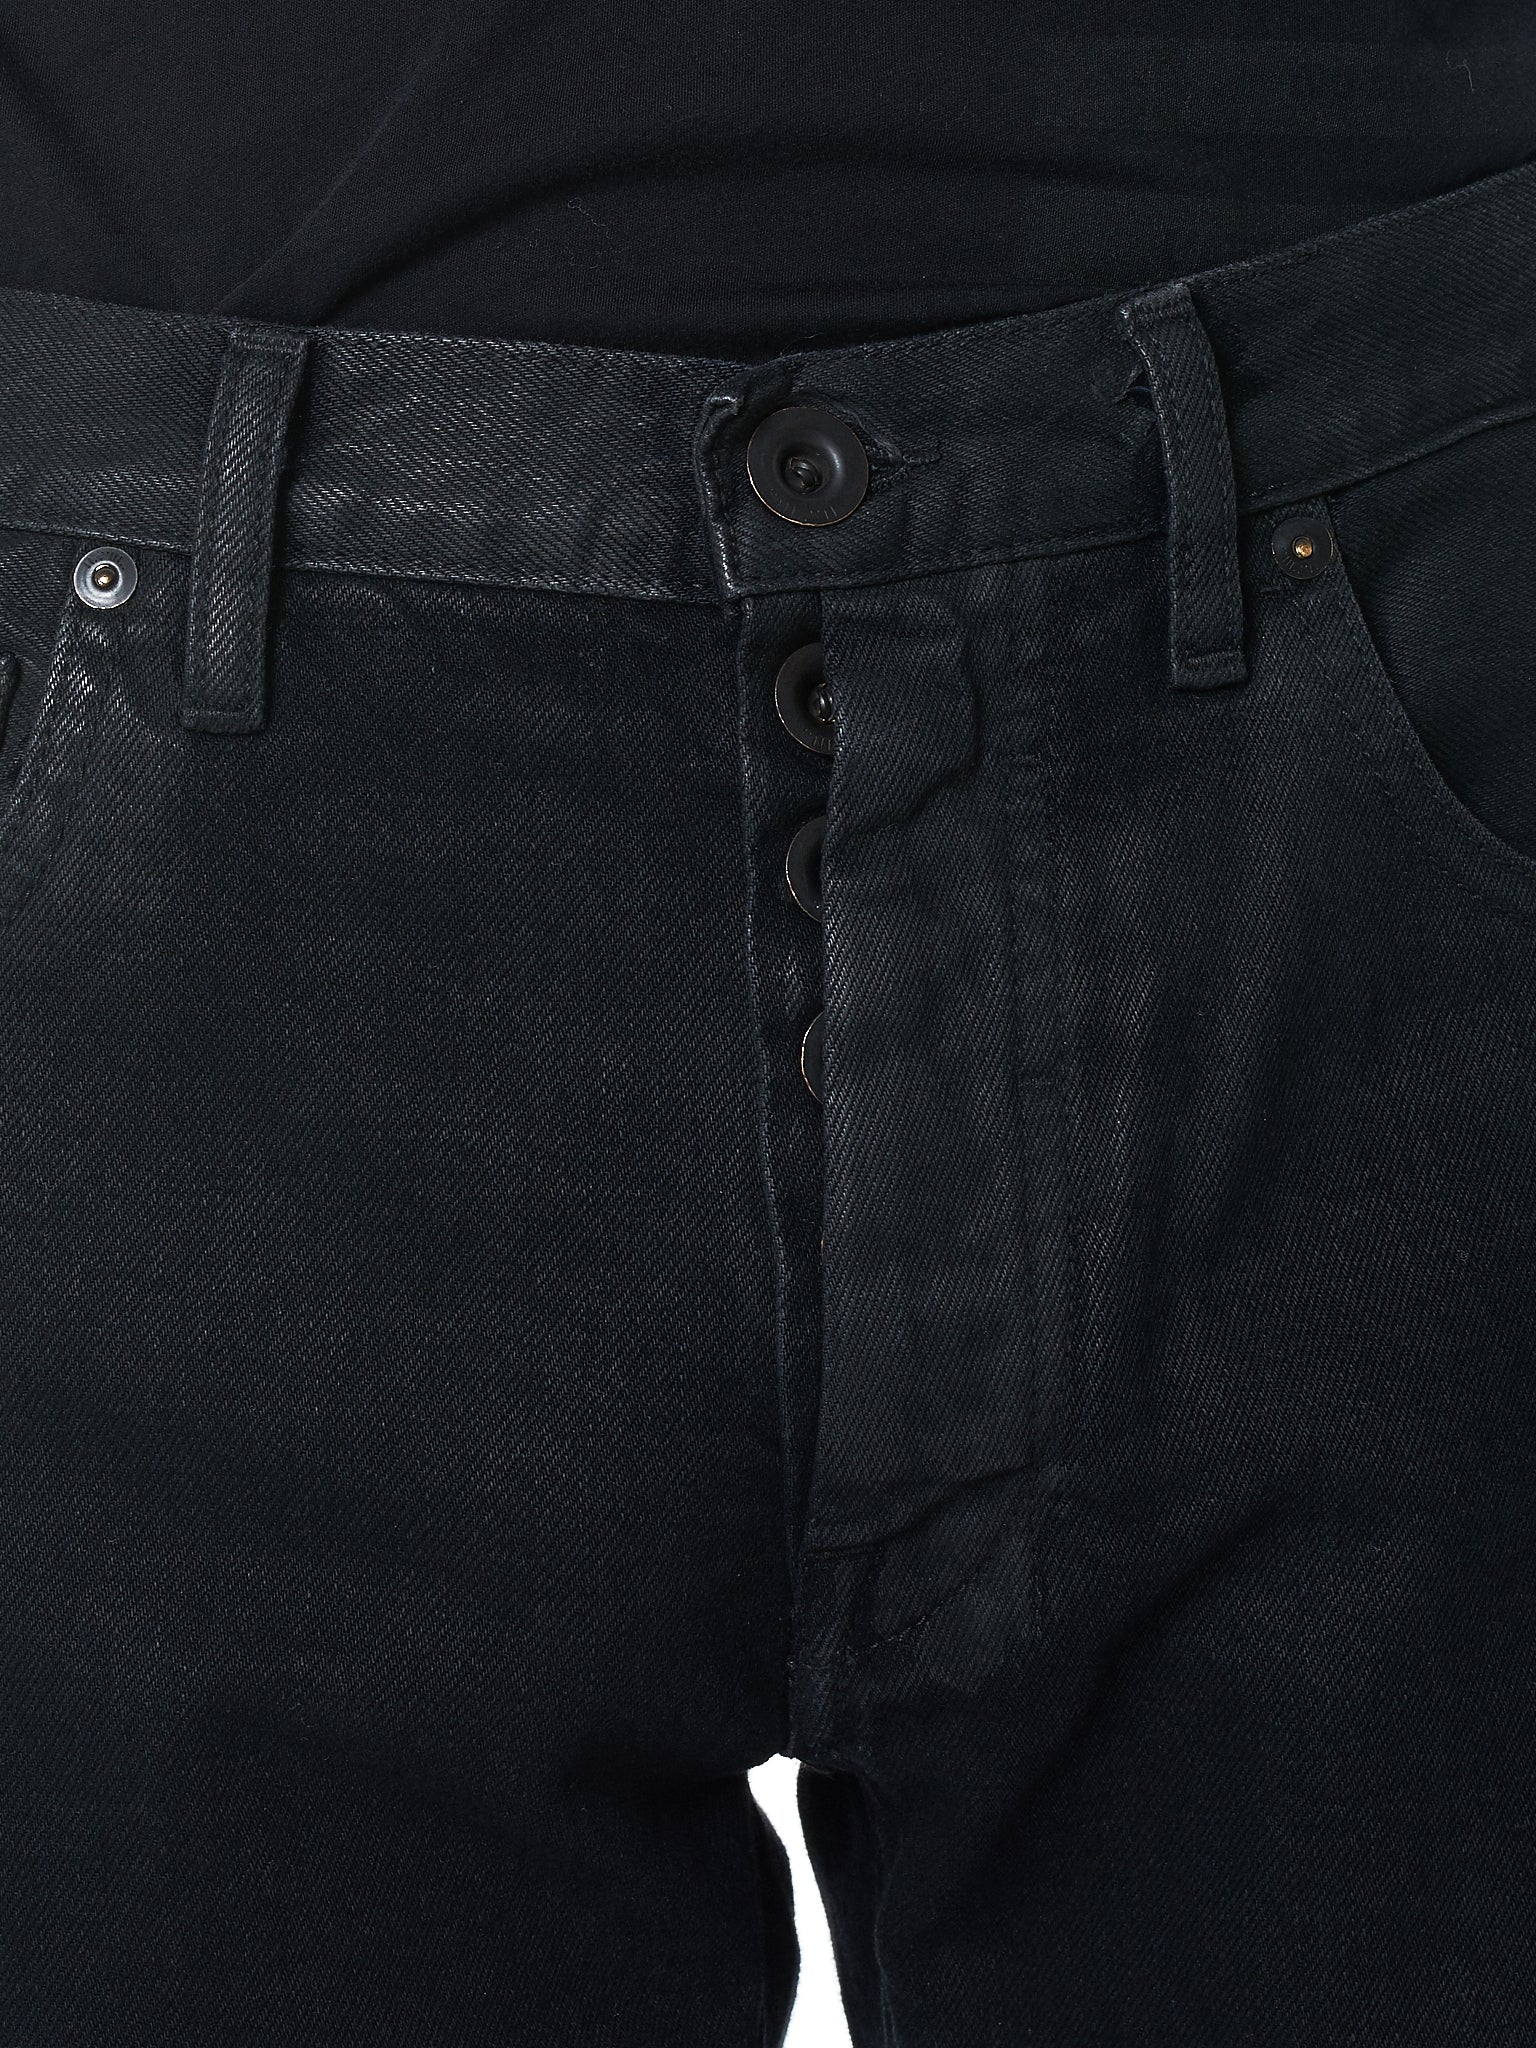 Unravel Jeans - Hlorenzo Detail 2